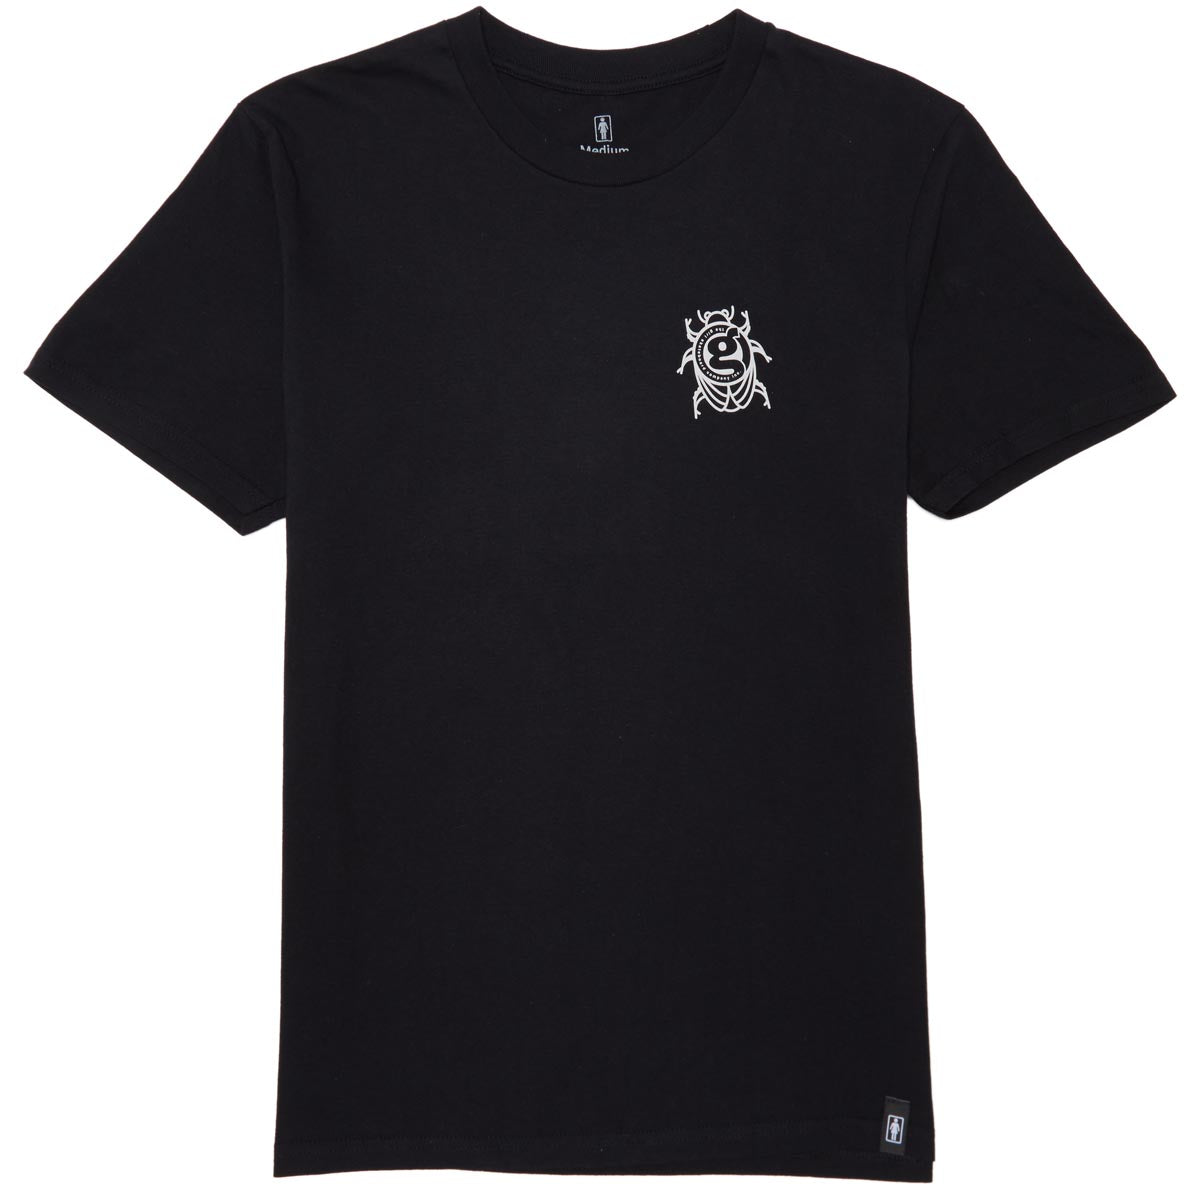 Girl Goth Beetle T-Shirt - Black image 2